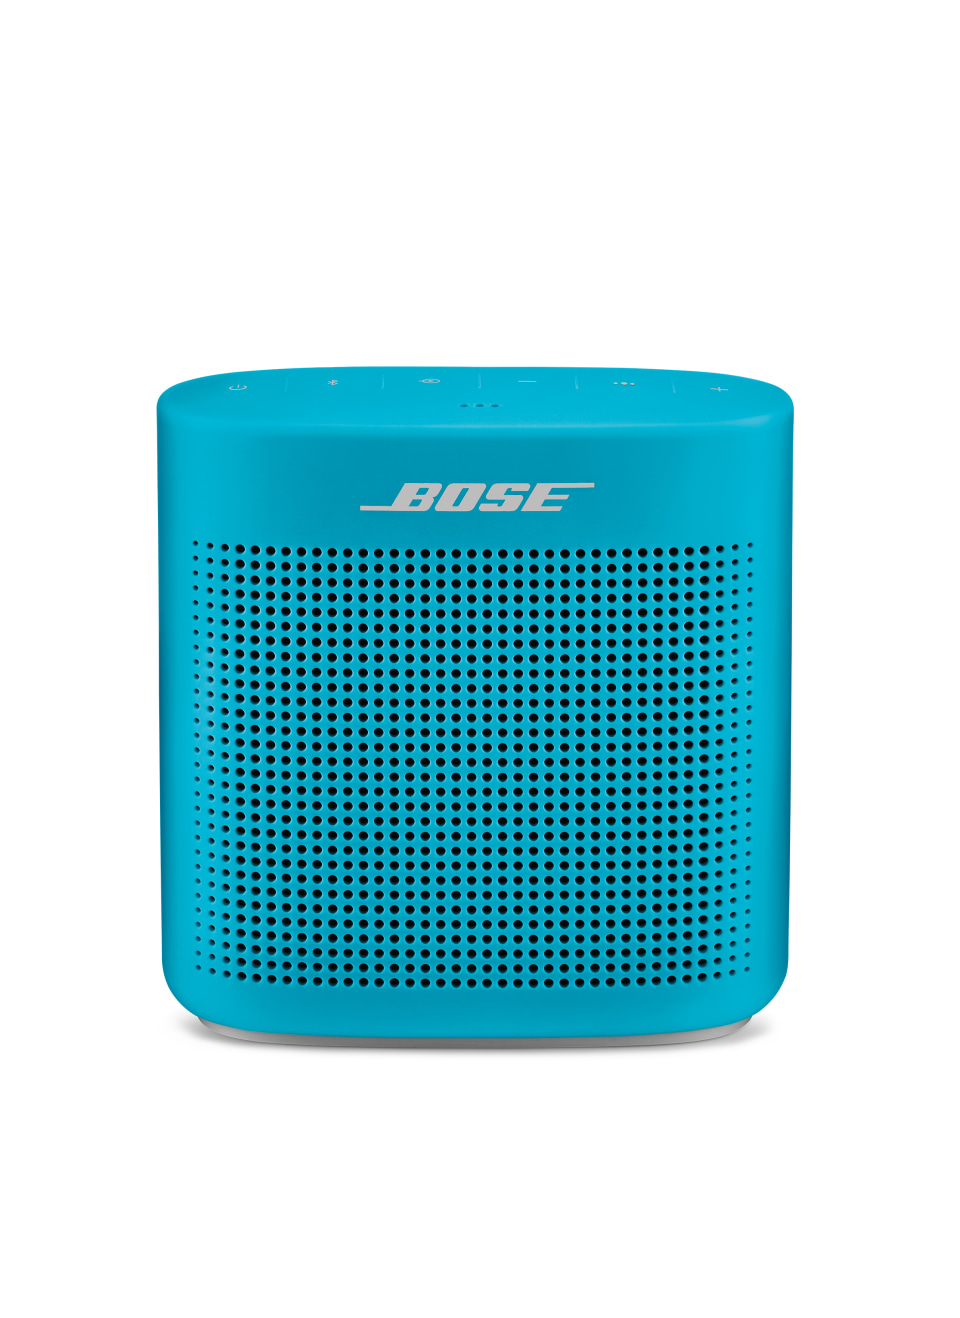 Alcatraz Island Happening Centralisere Bose SoundLink Color 2 Portable Bluetooth Speaker - Blue | Dell USA